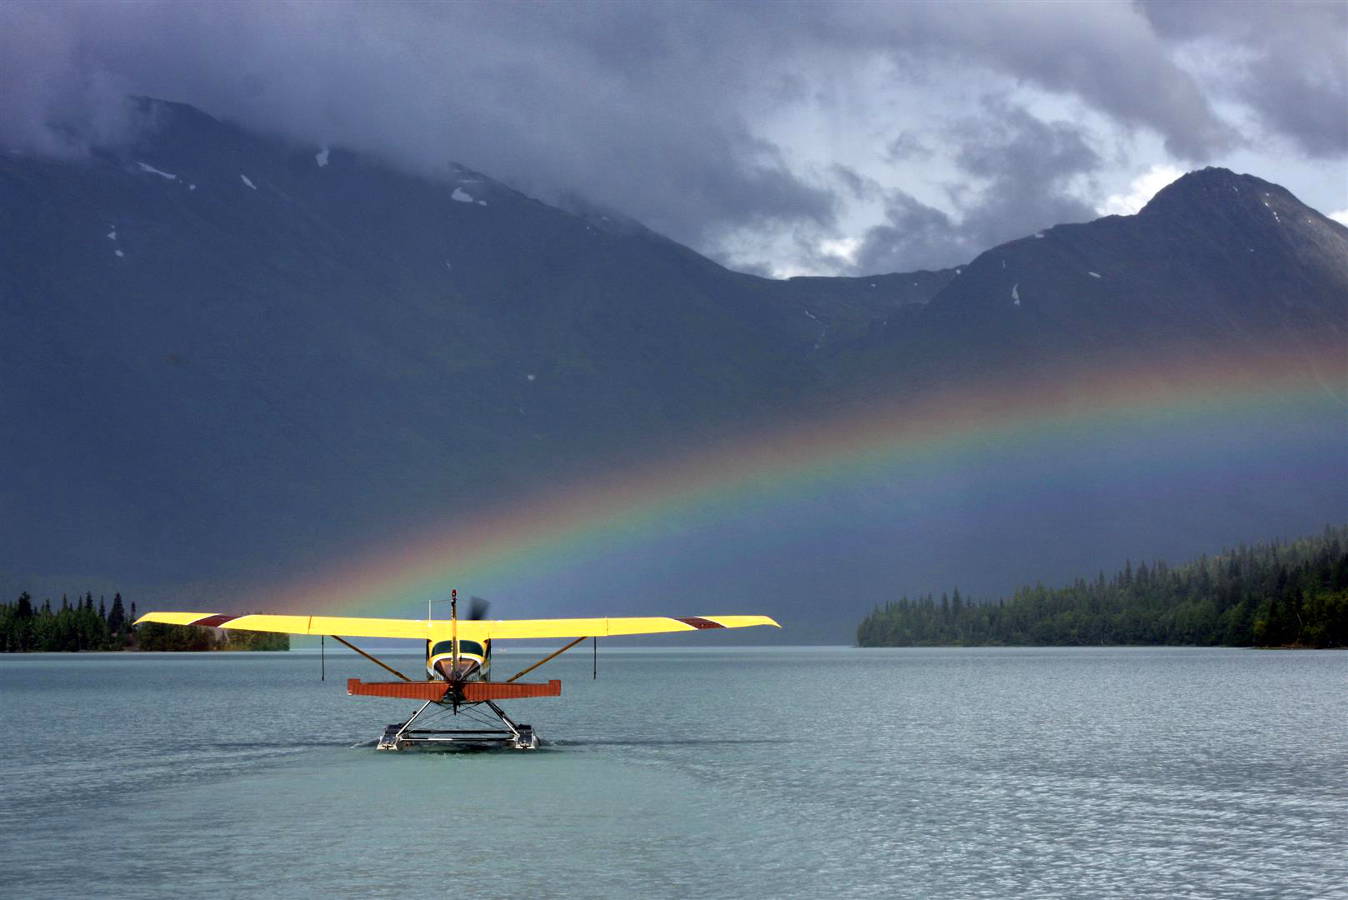 A seaplane on a beautiful Alaskan lake with a rainbow.